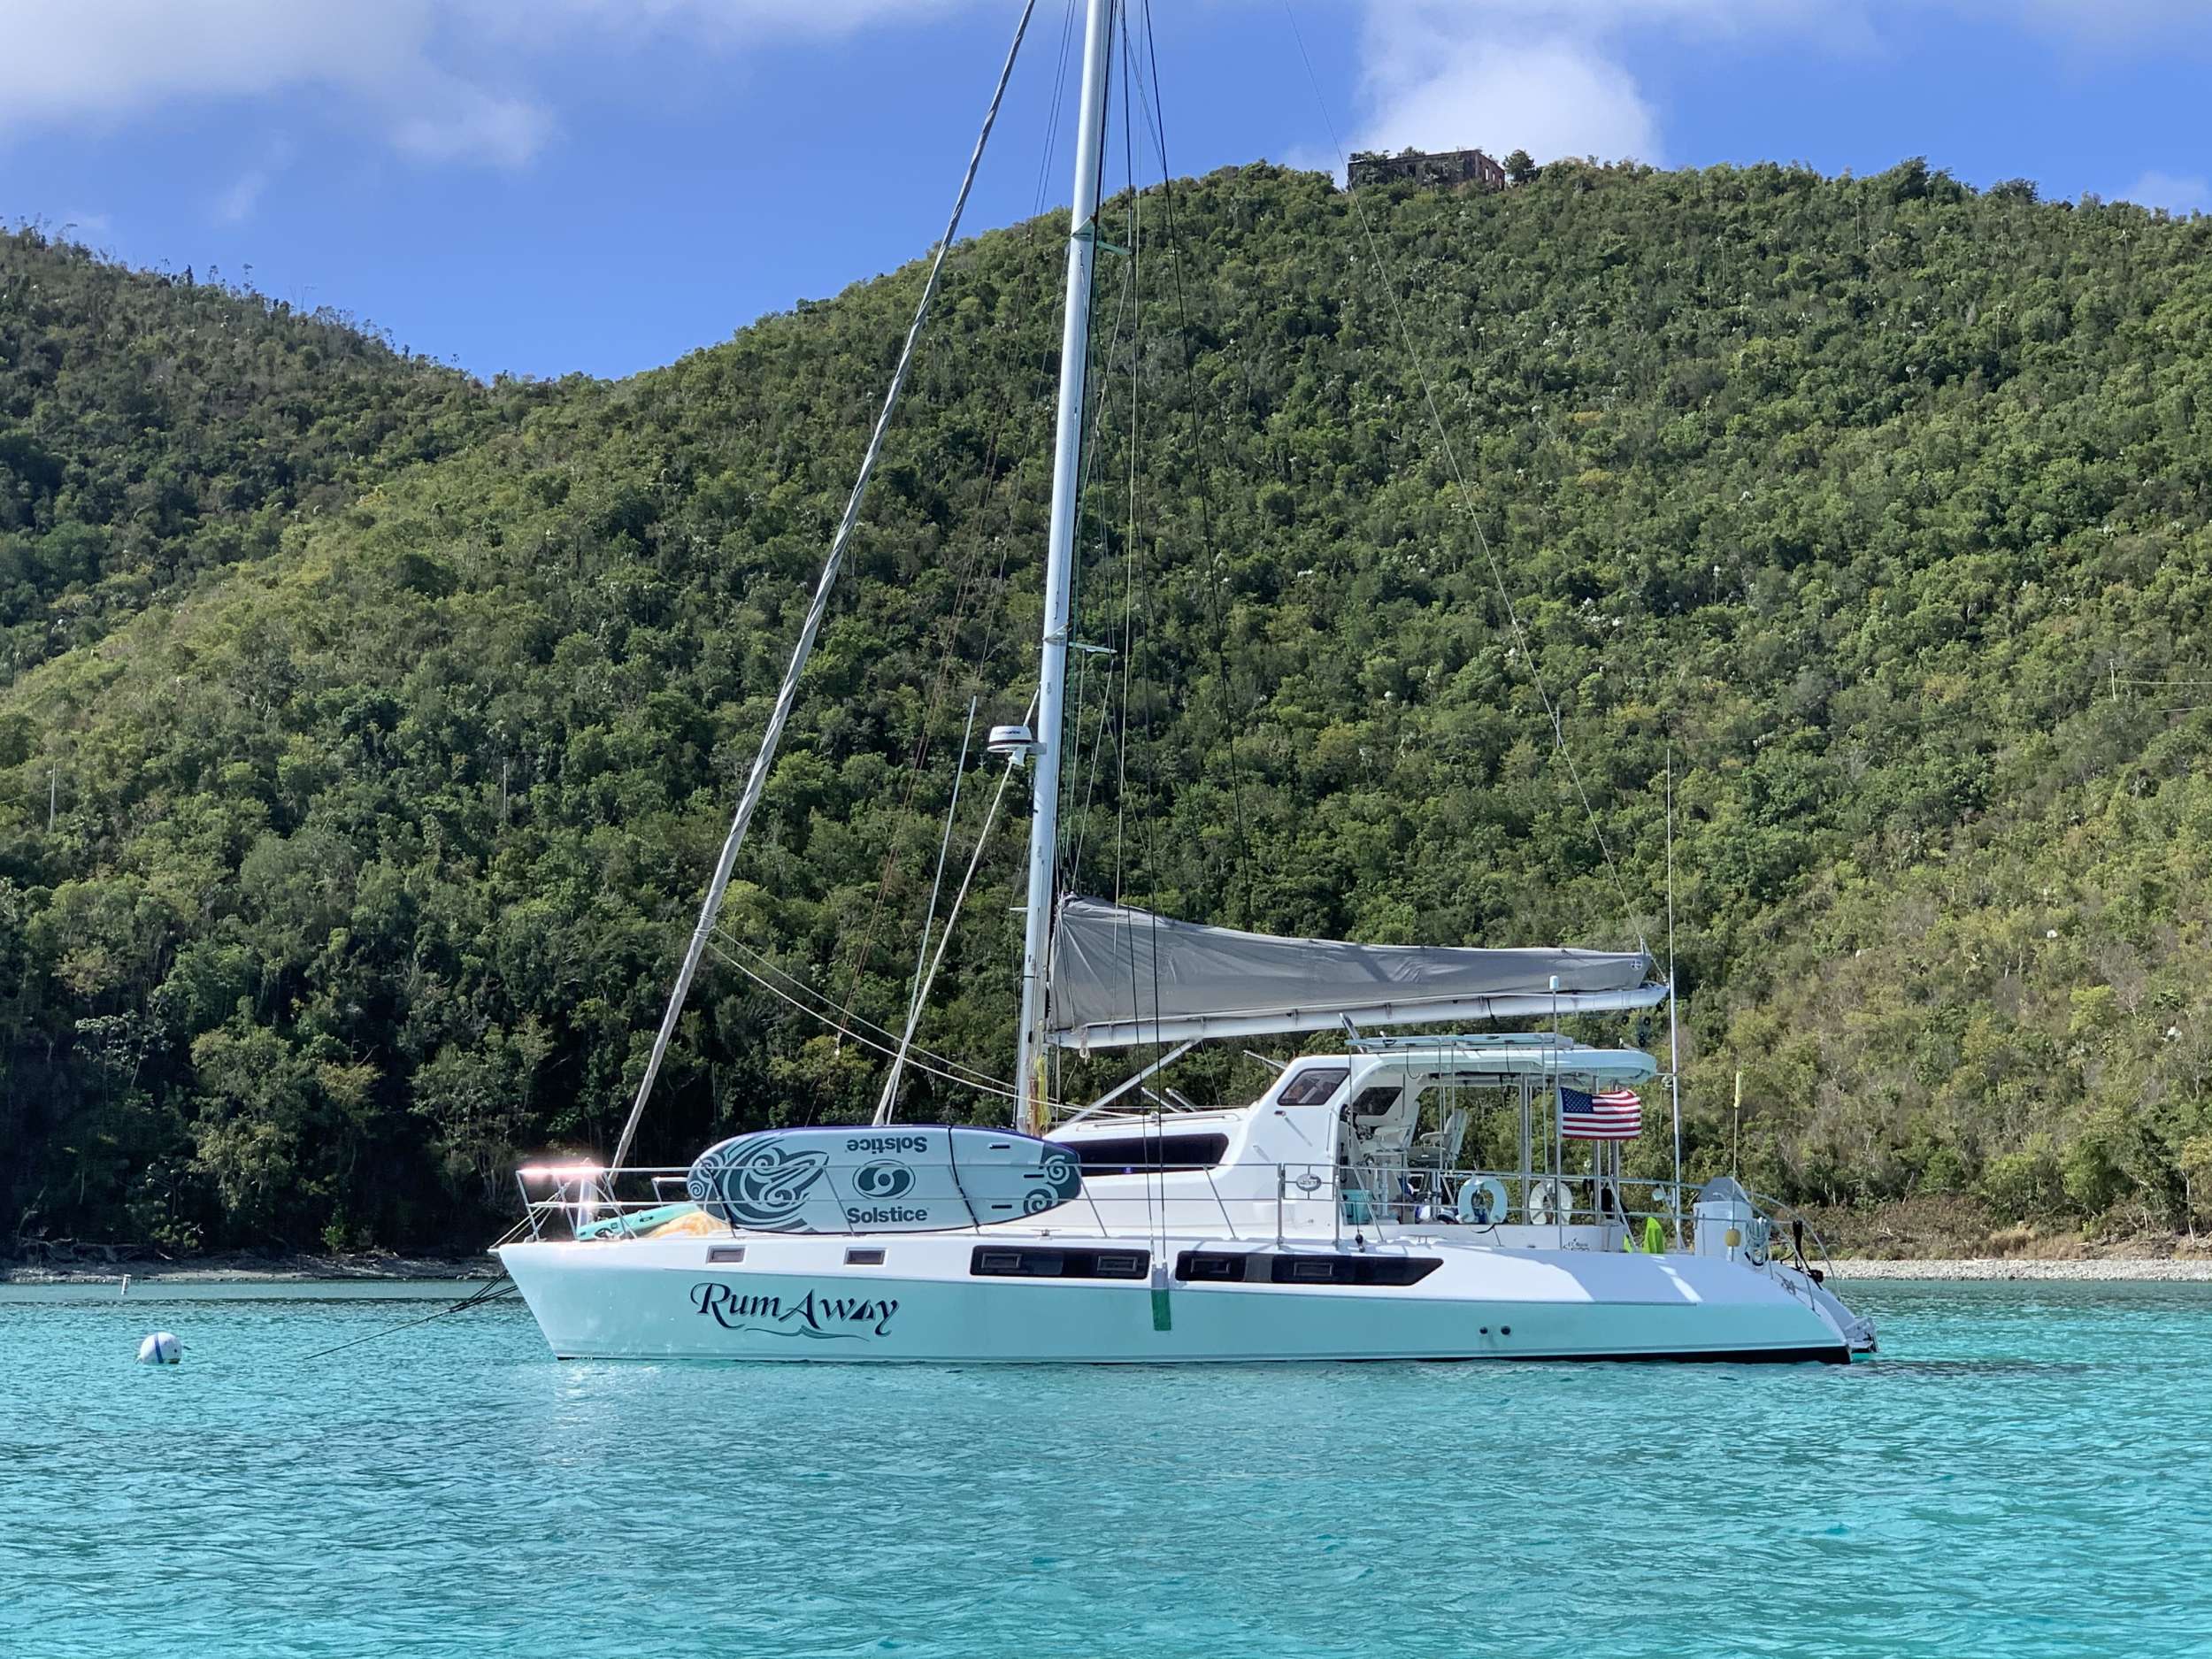 Rumaway 53 foot charter yacht